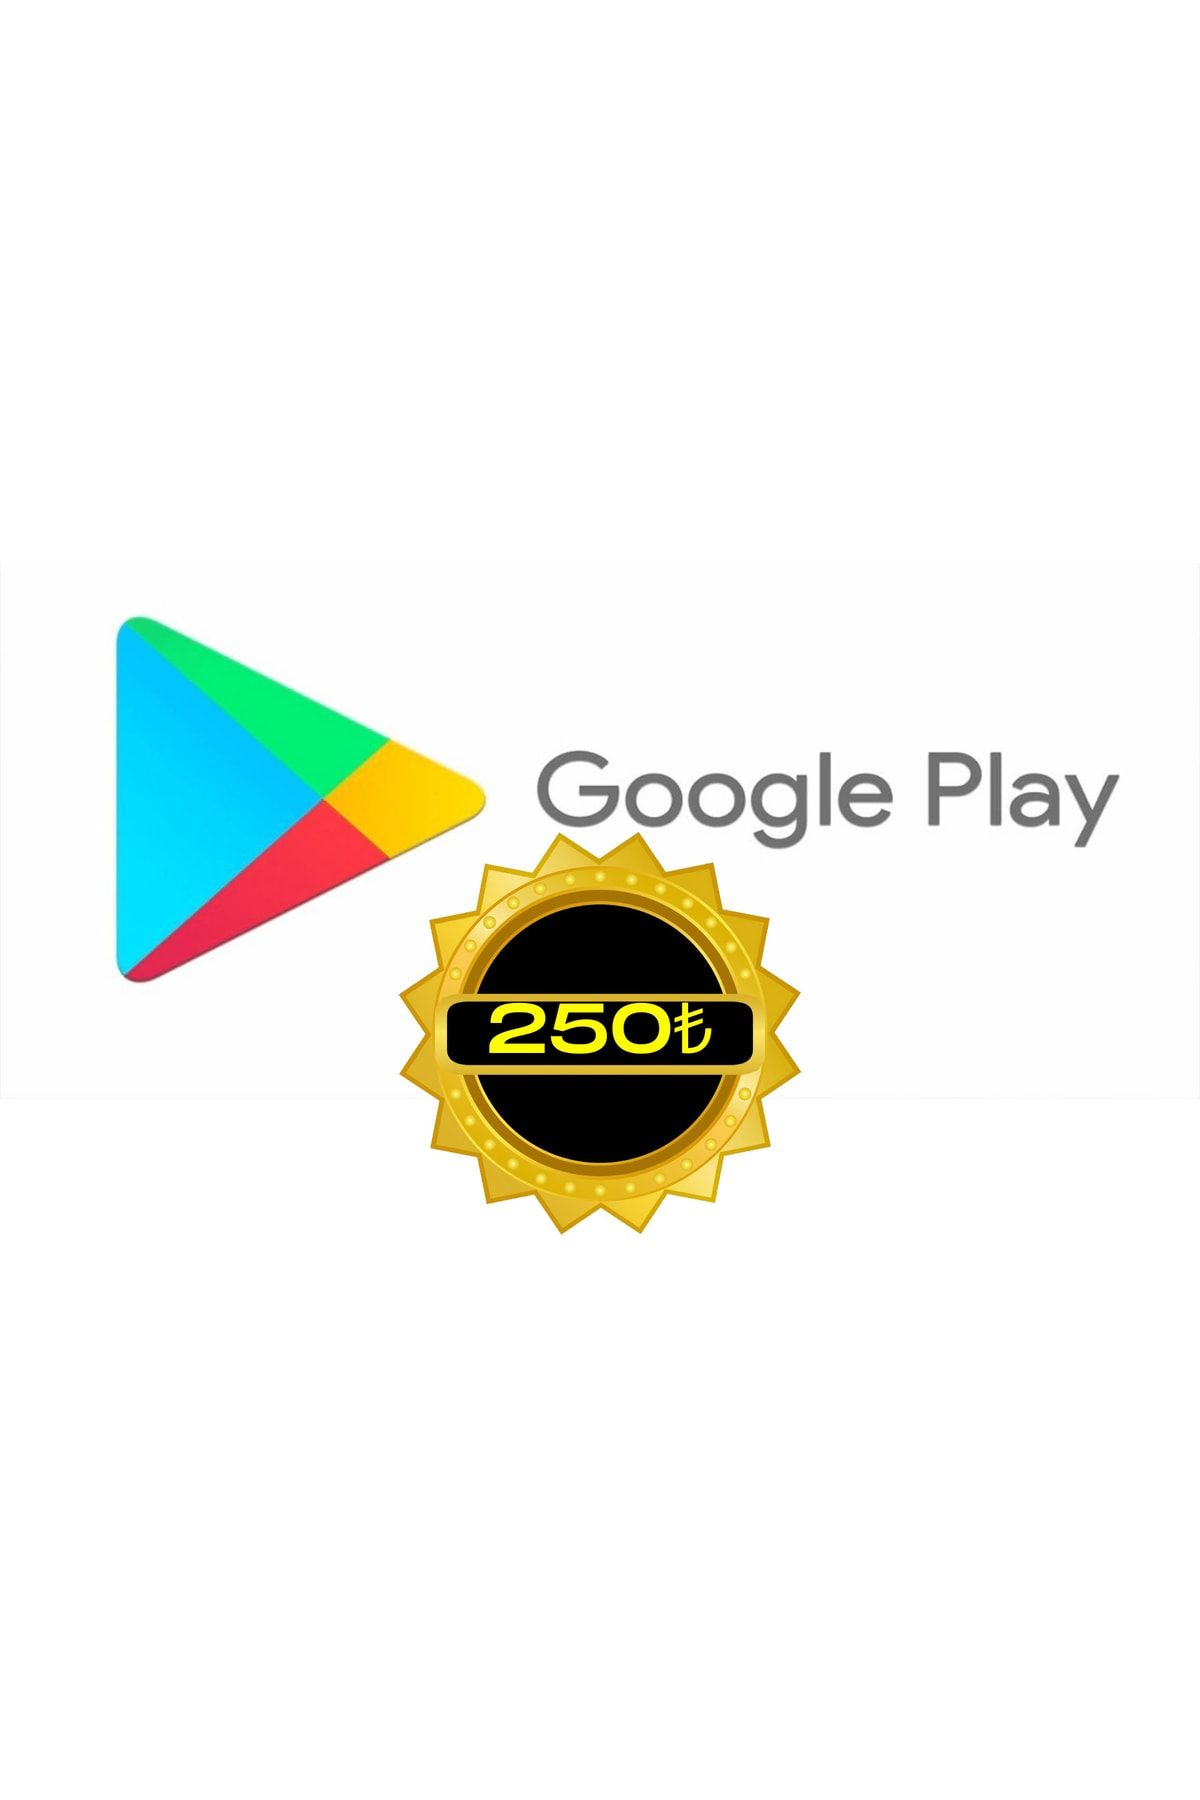 Google Play 250tl